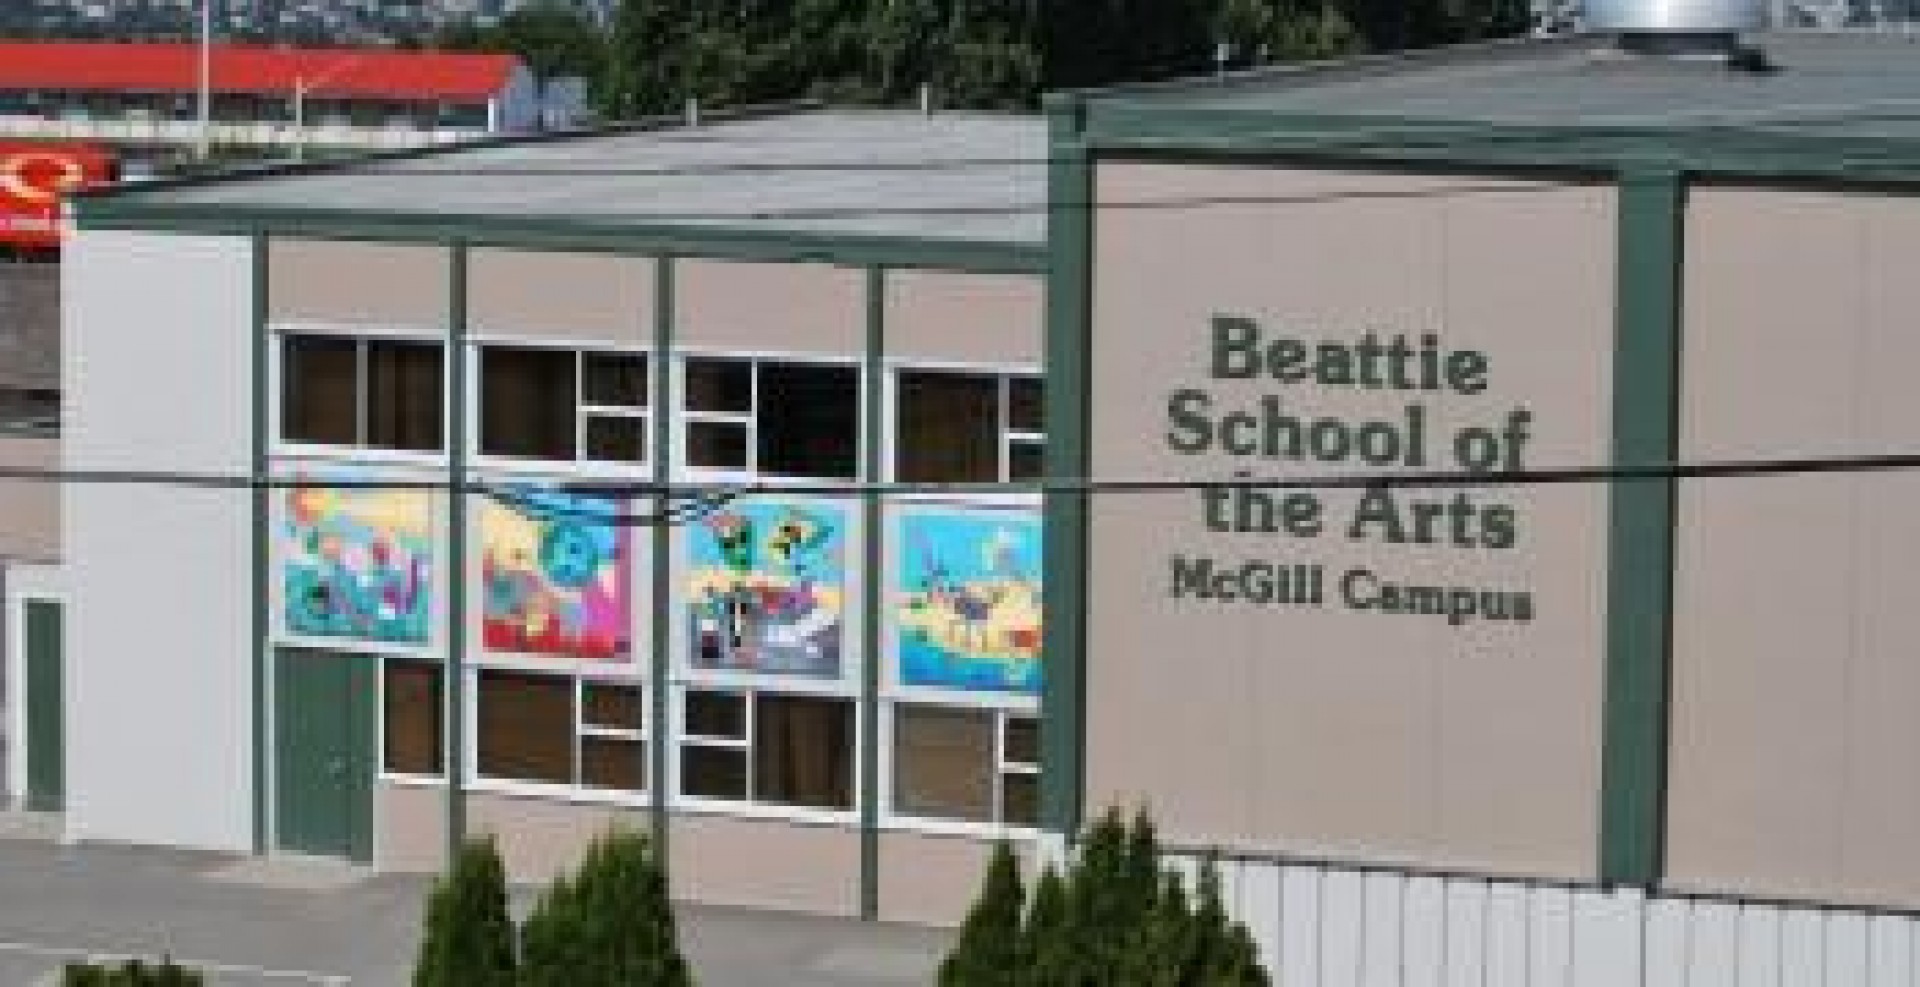 Beattie School of the Arts (McGill Campus)